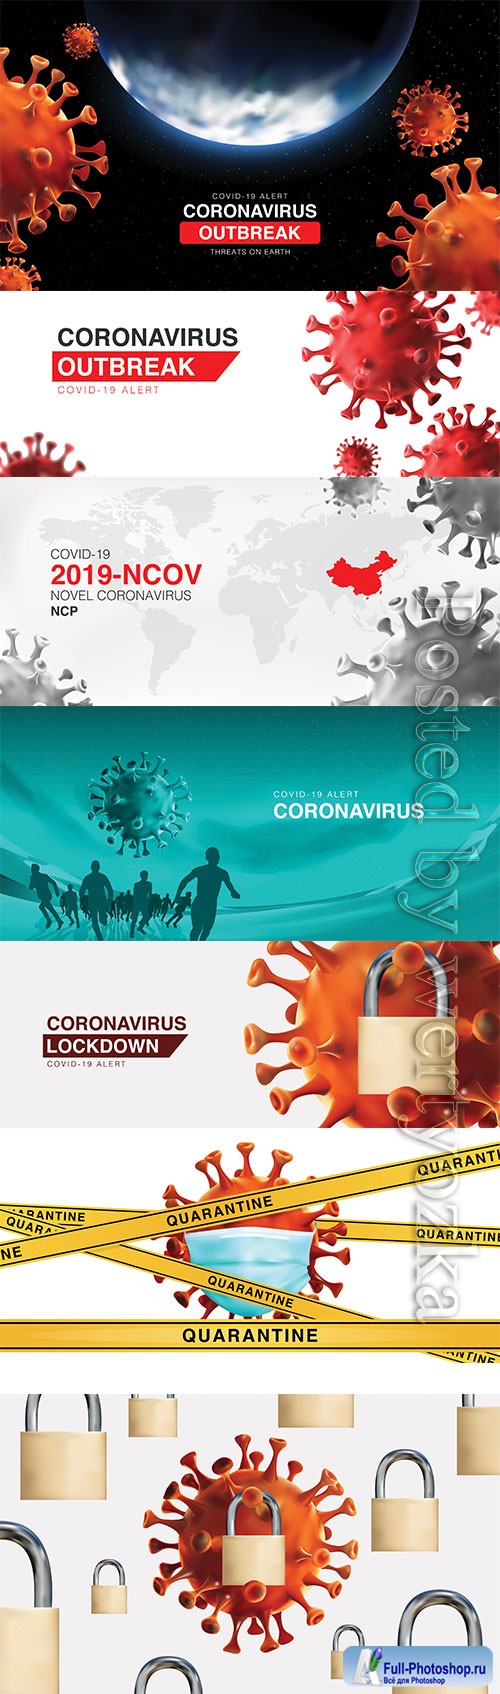 Isolated 3D Realistic illustration of Novel coronavirus cell 2019-nCoV